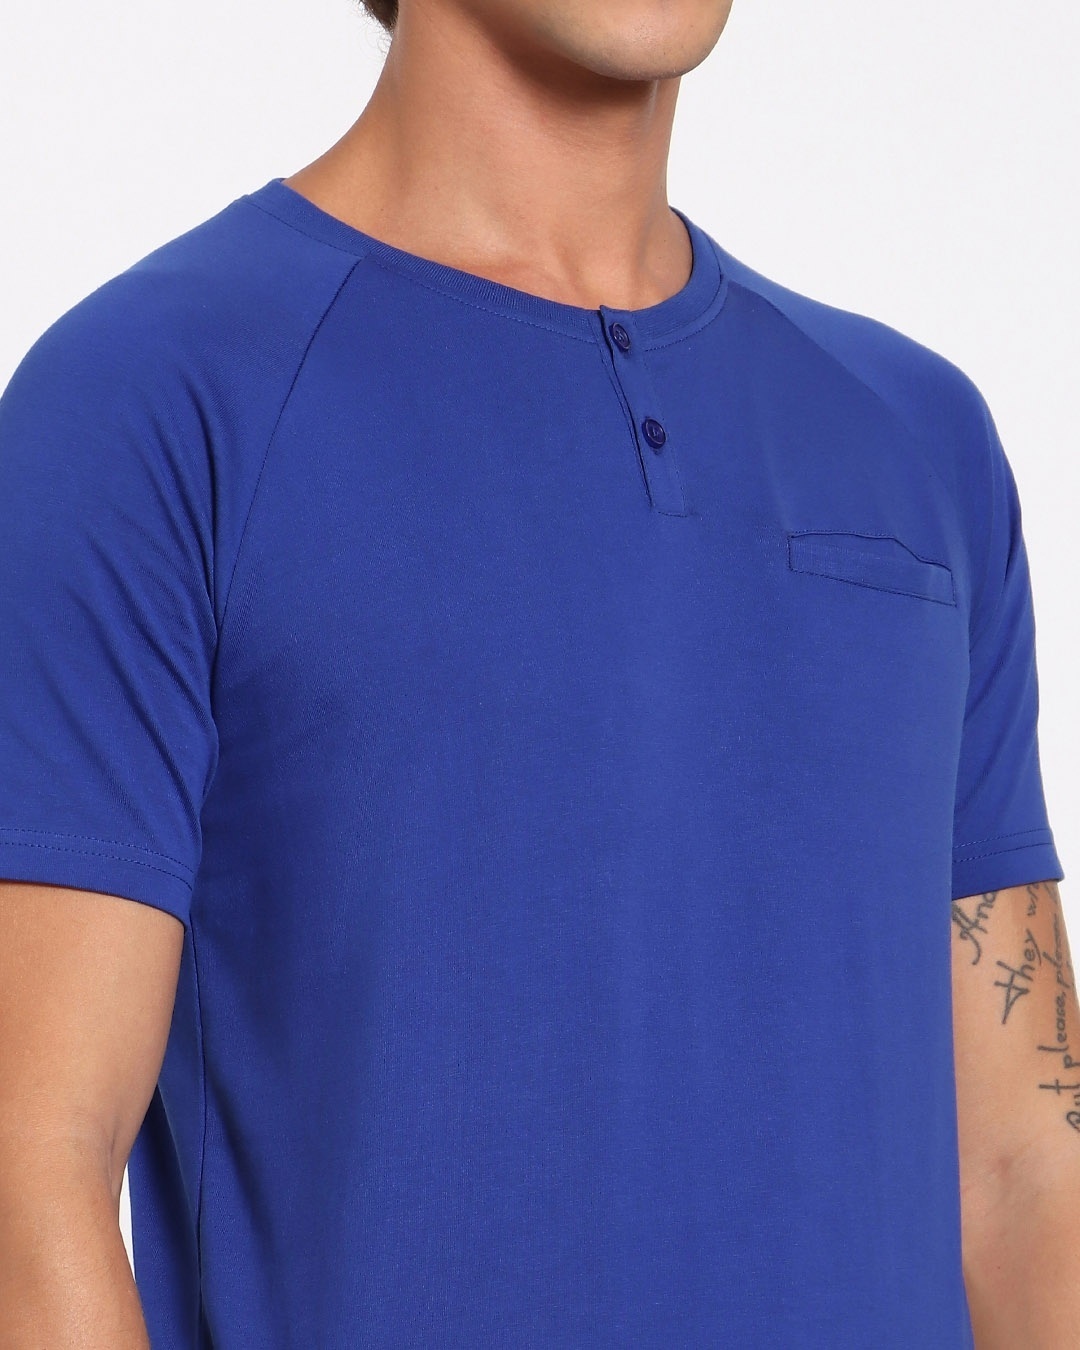 Shop Hashtag Blue Henley T-Shirt